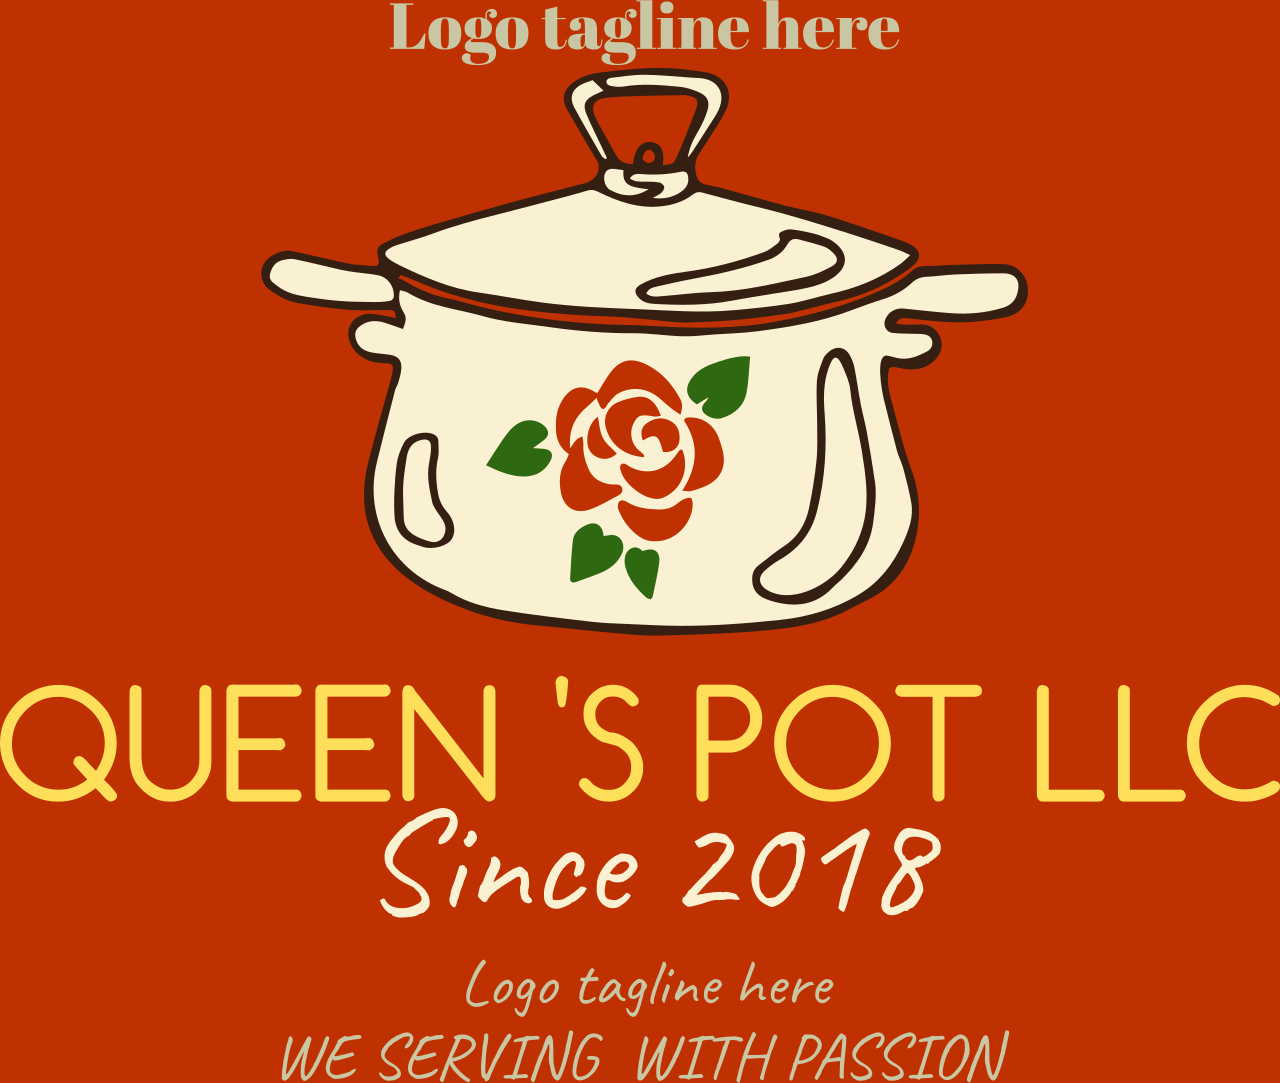 QUEEN 'S POT LLC's logo